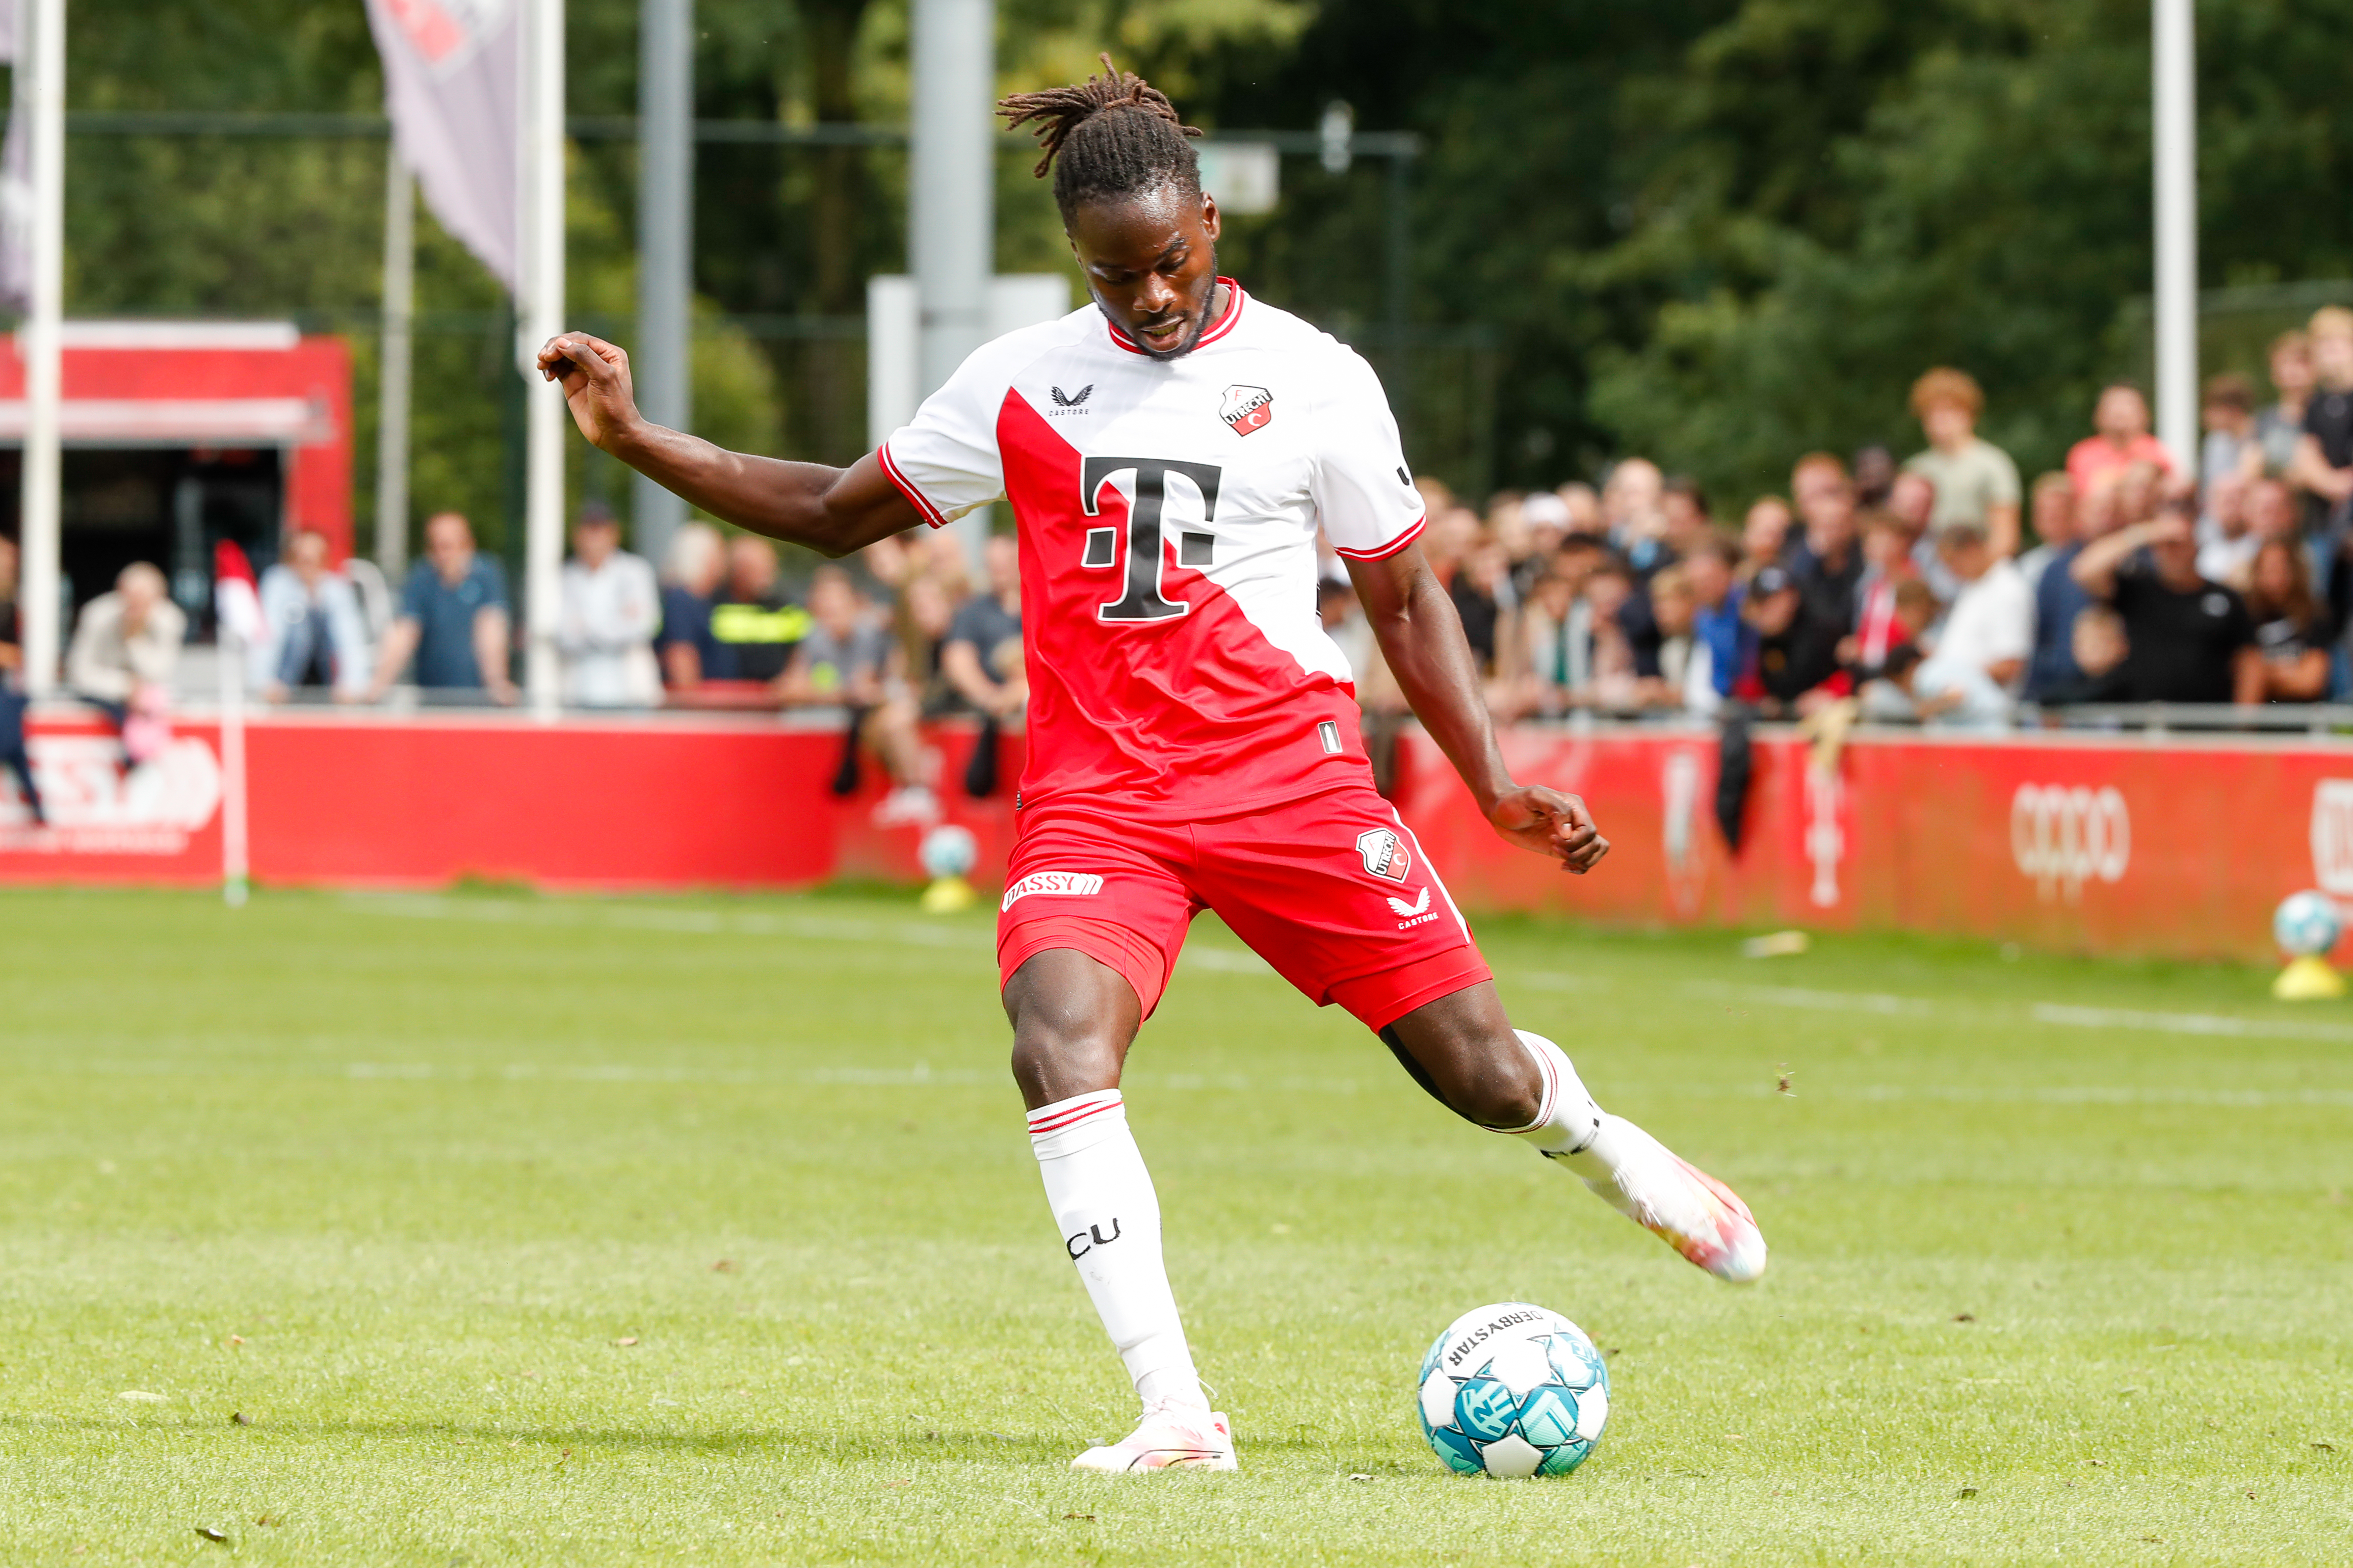 Akkoord met Almere City FC: Christopher Mamengi vertrekt